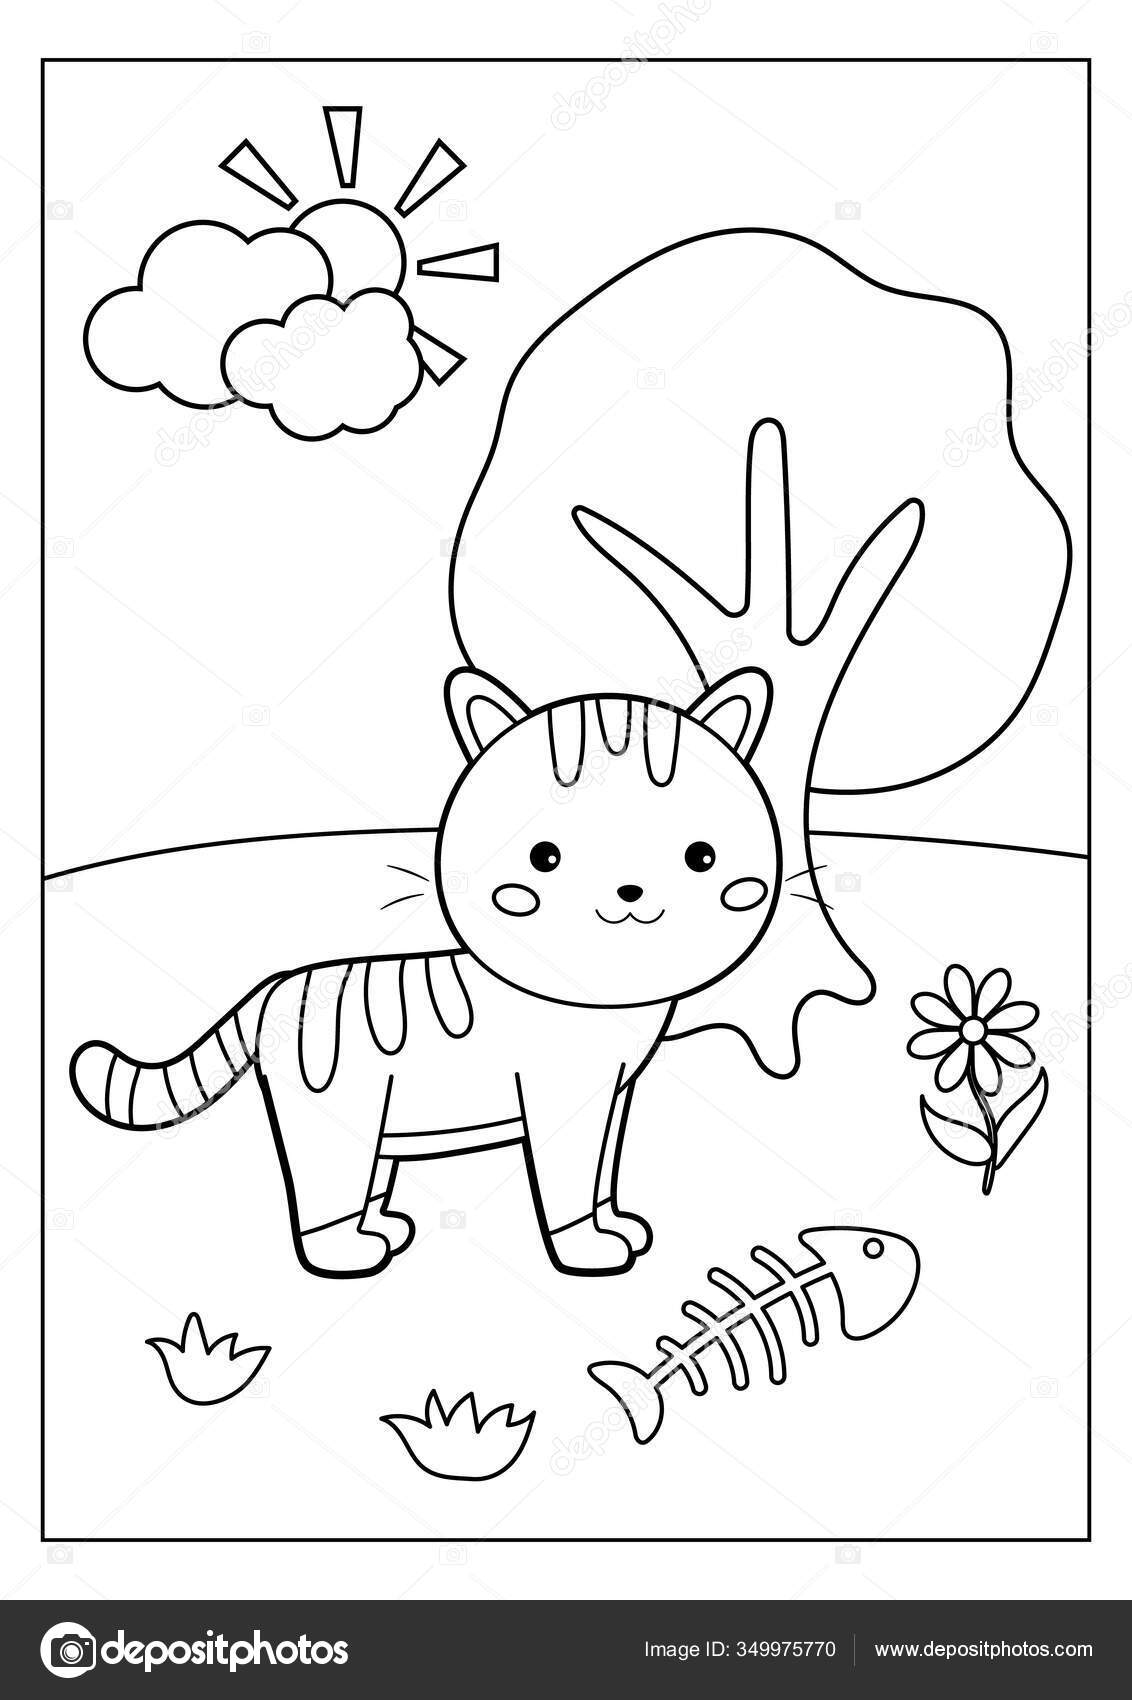 Desenho de página para colorir de rabisco kawaii bonito animal de desenho  de gato